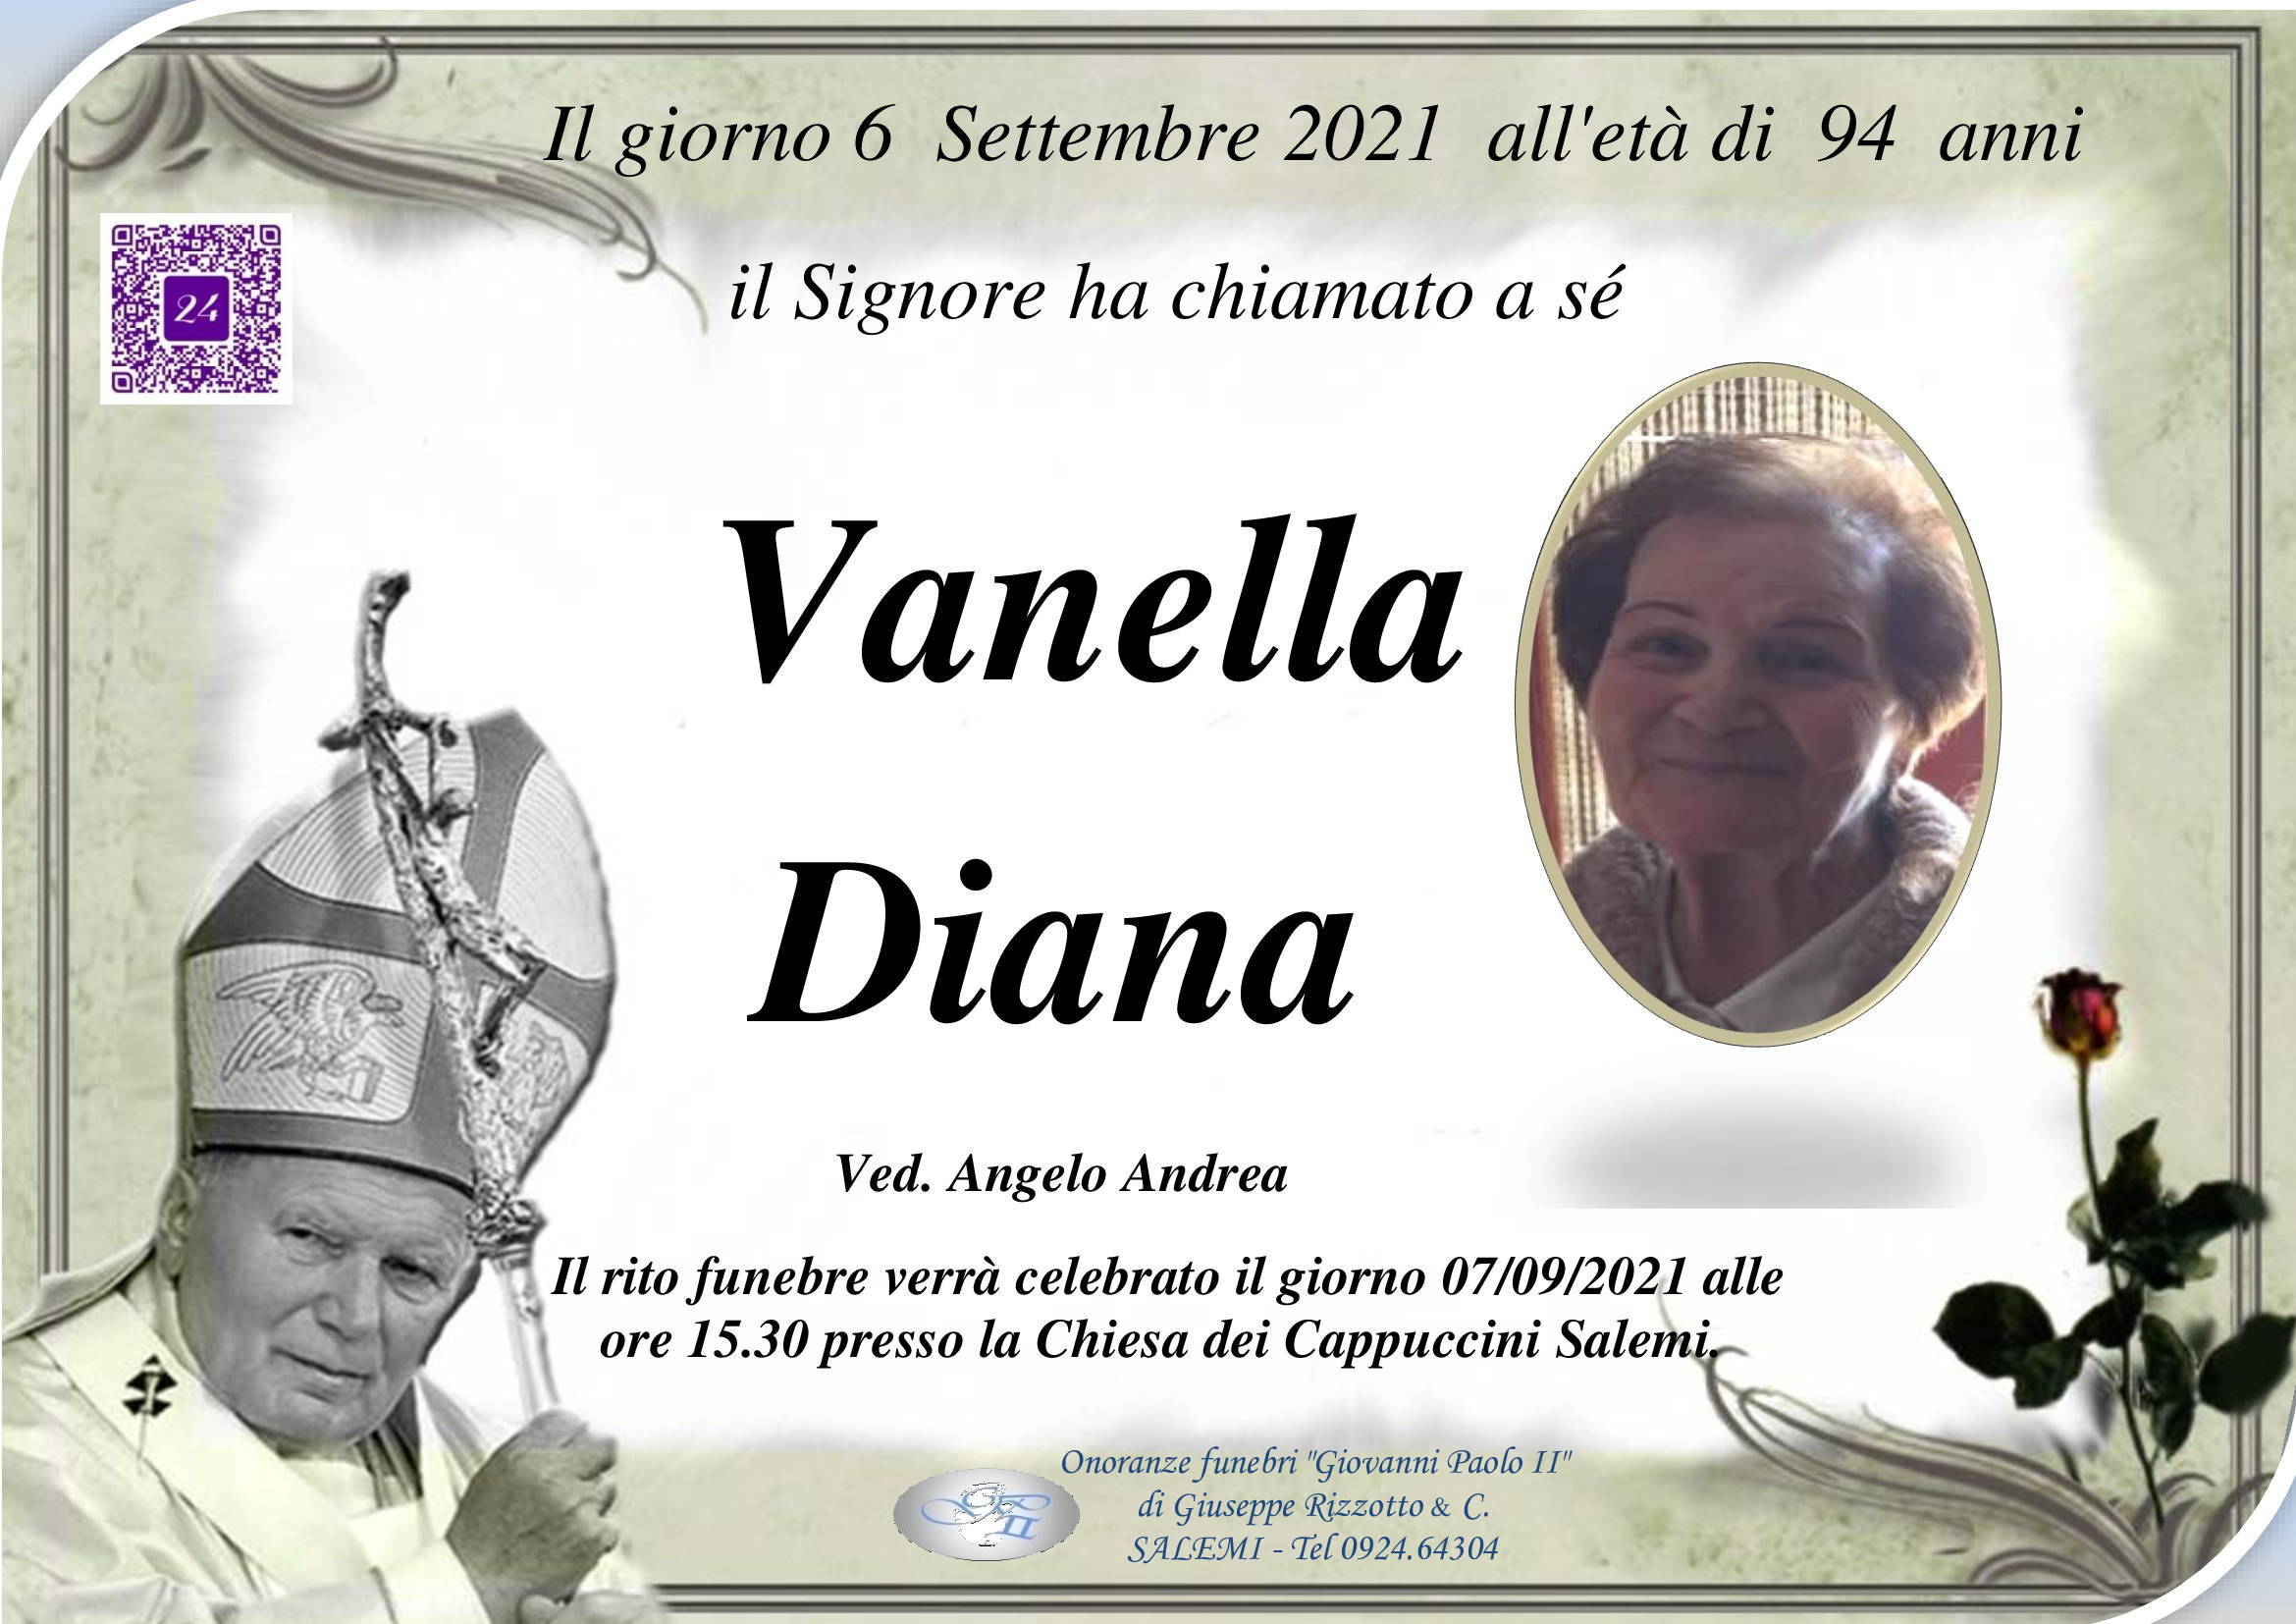 Vanella Diana